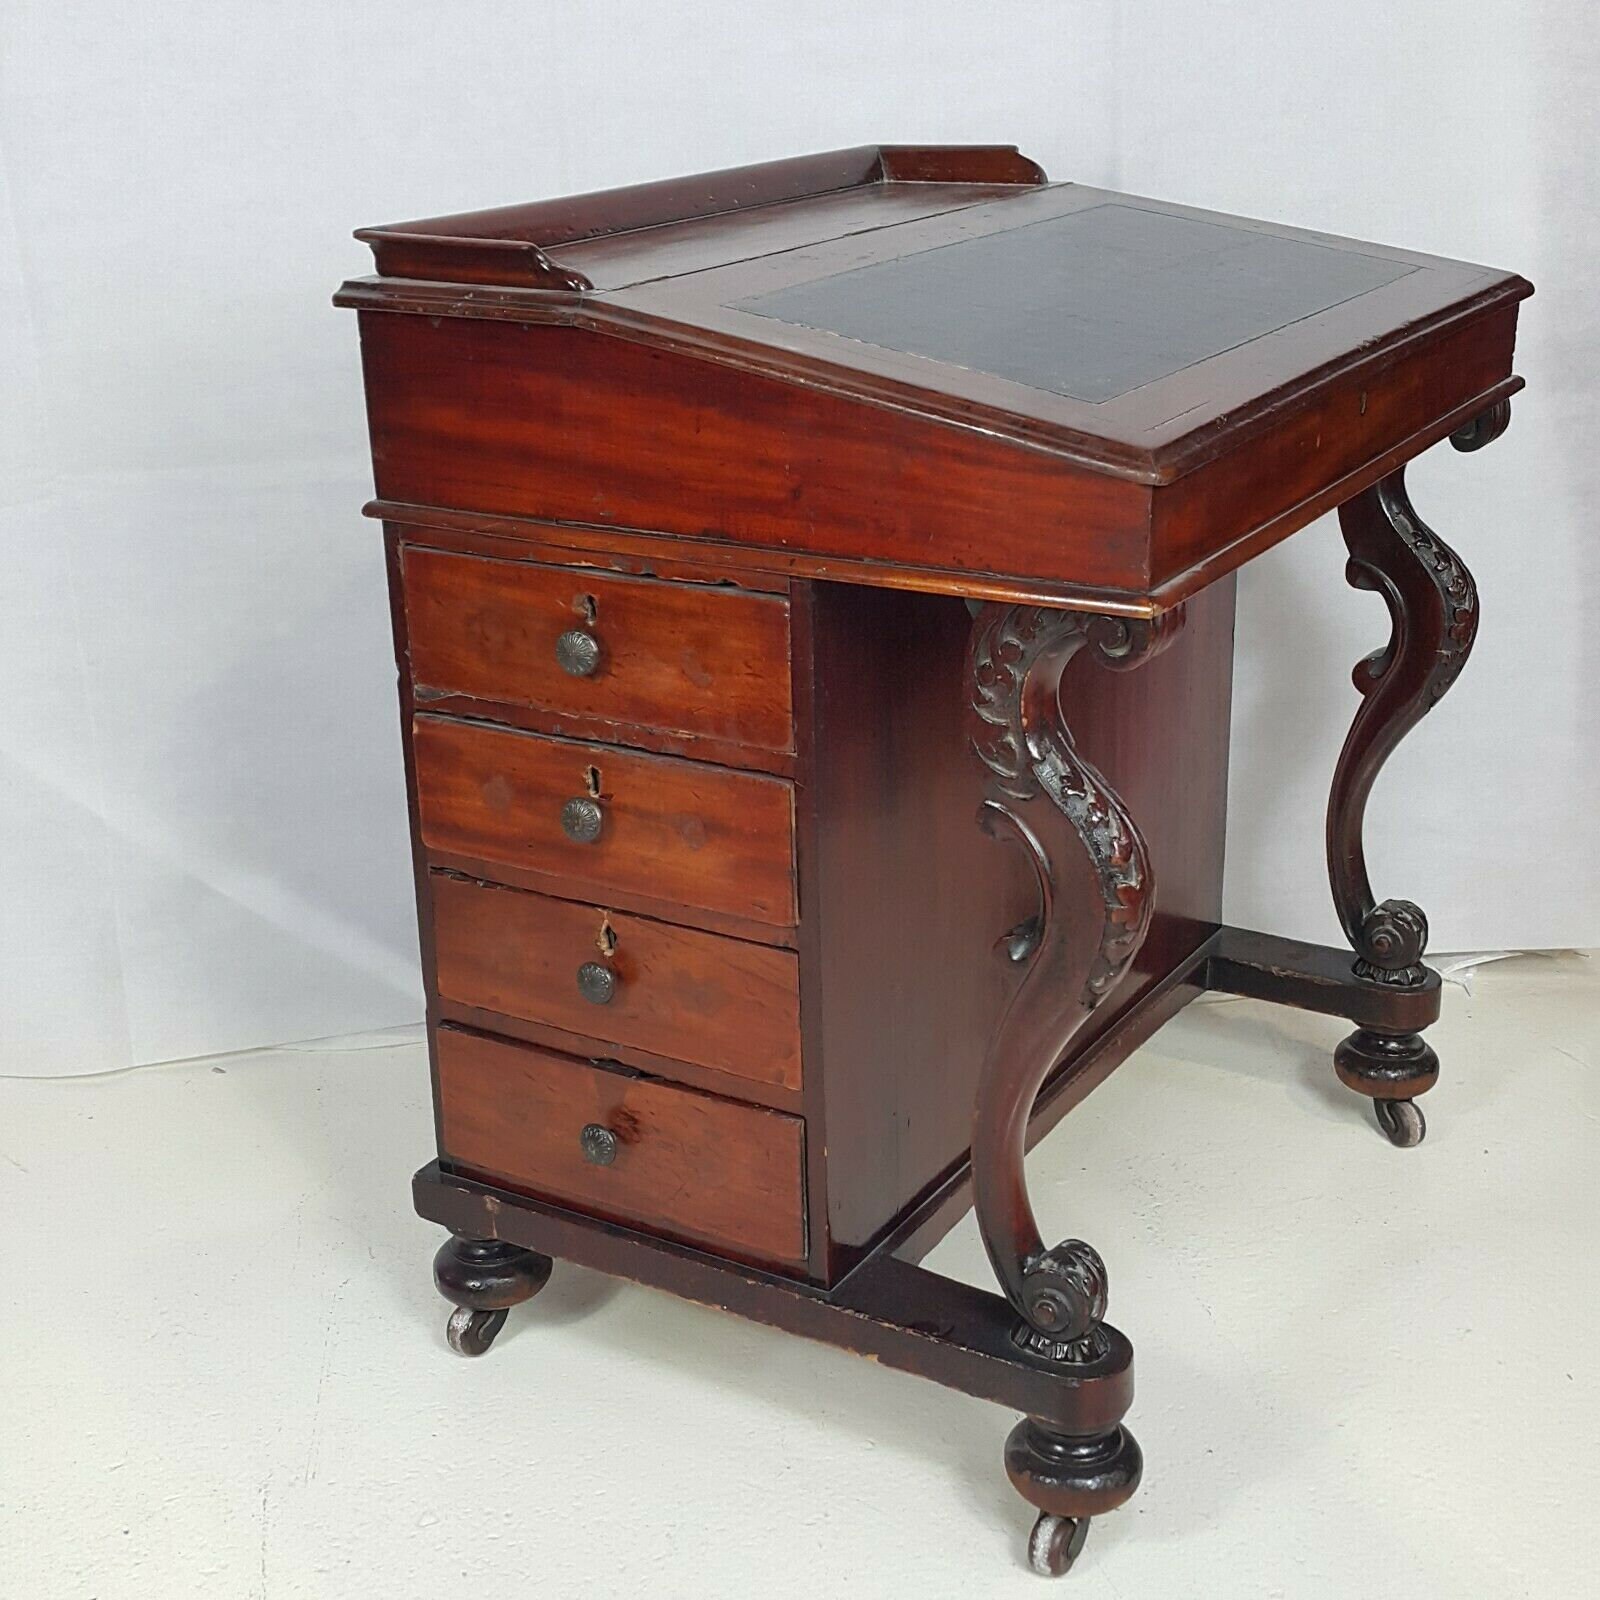 SOLD. Antique Sage Green 6 Drawer Writer’s Office Desk with Brass Knobs.  Work from Home desk laptop desk. Hand Painted Desk. Farmhouse desk.